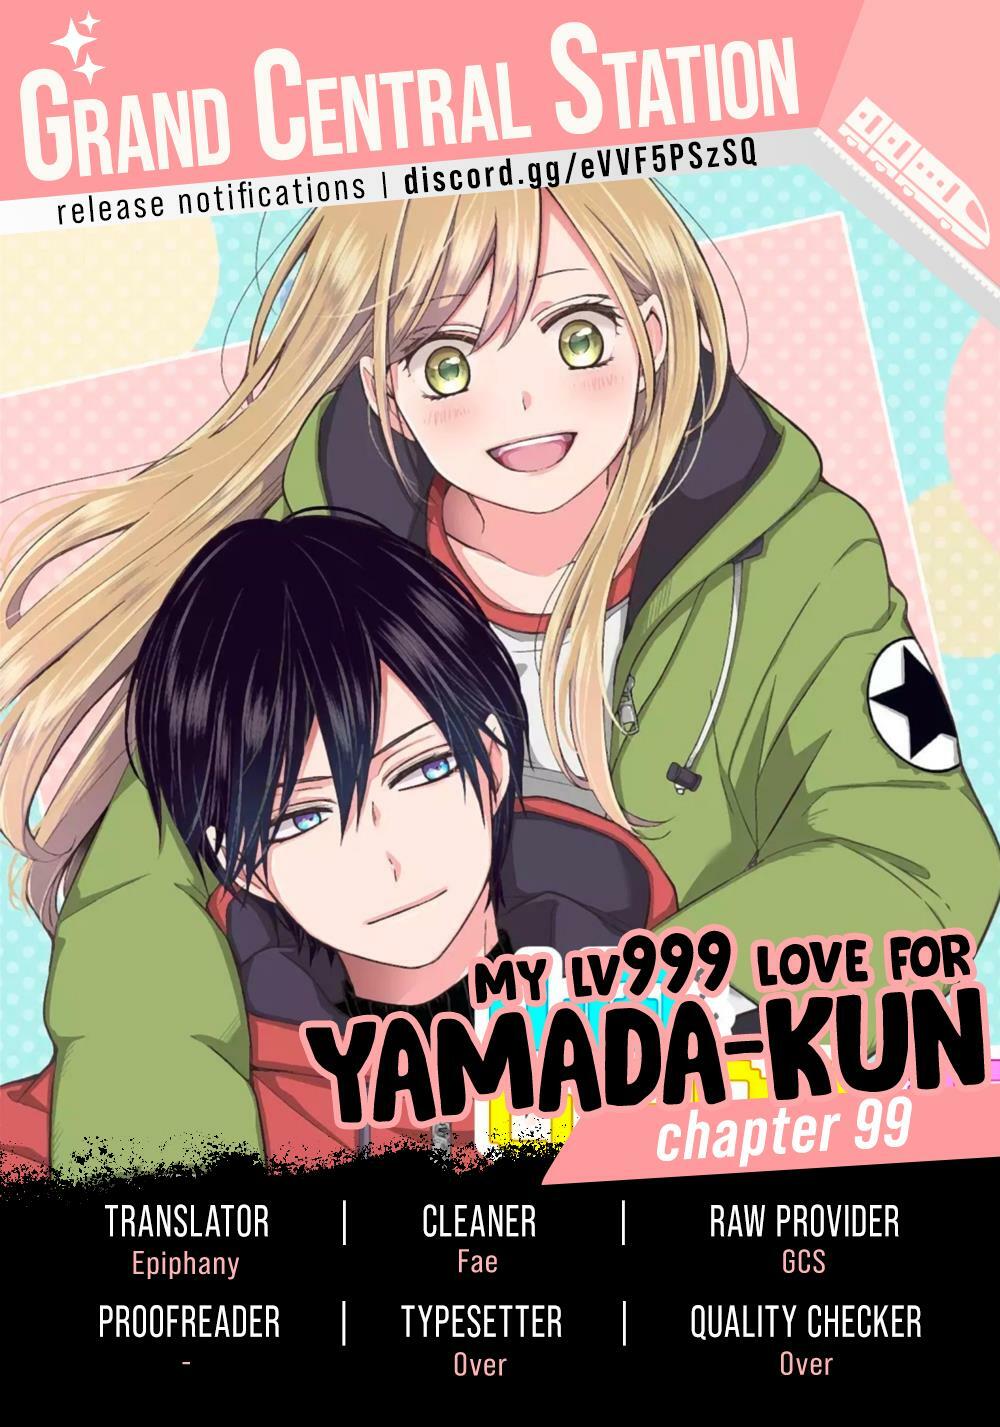 Volume 4, My Love Story with Yamada-kun at Lv999